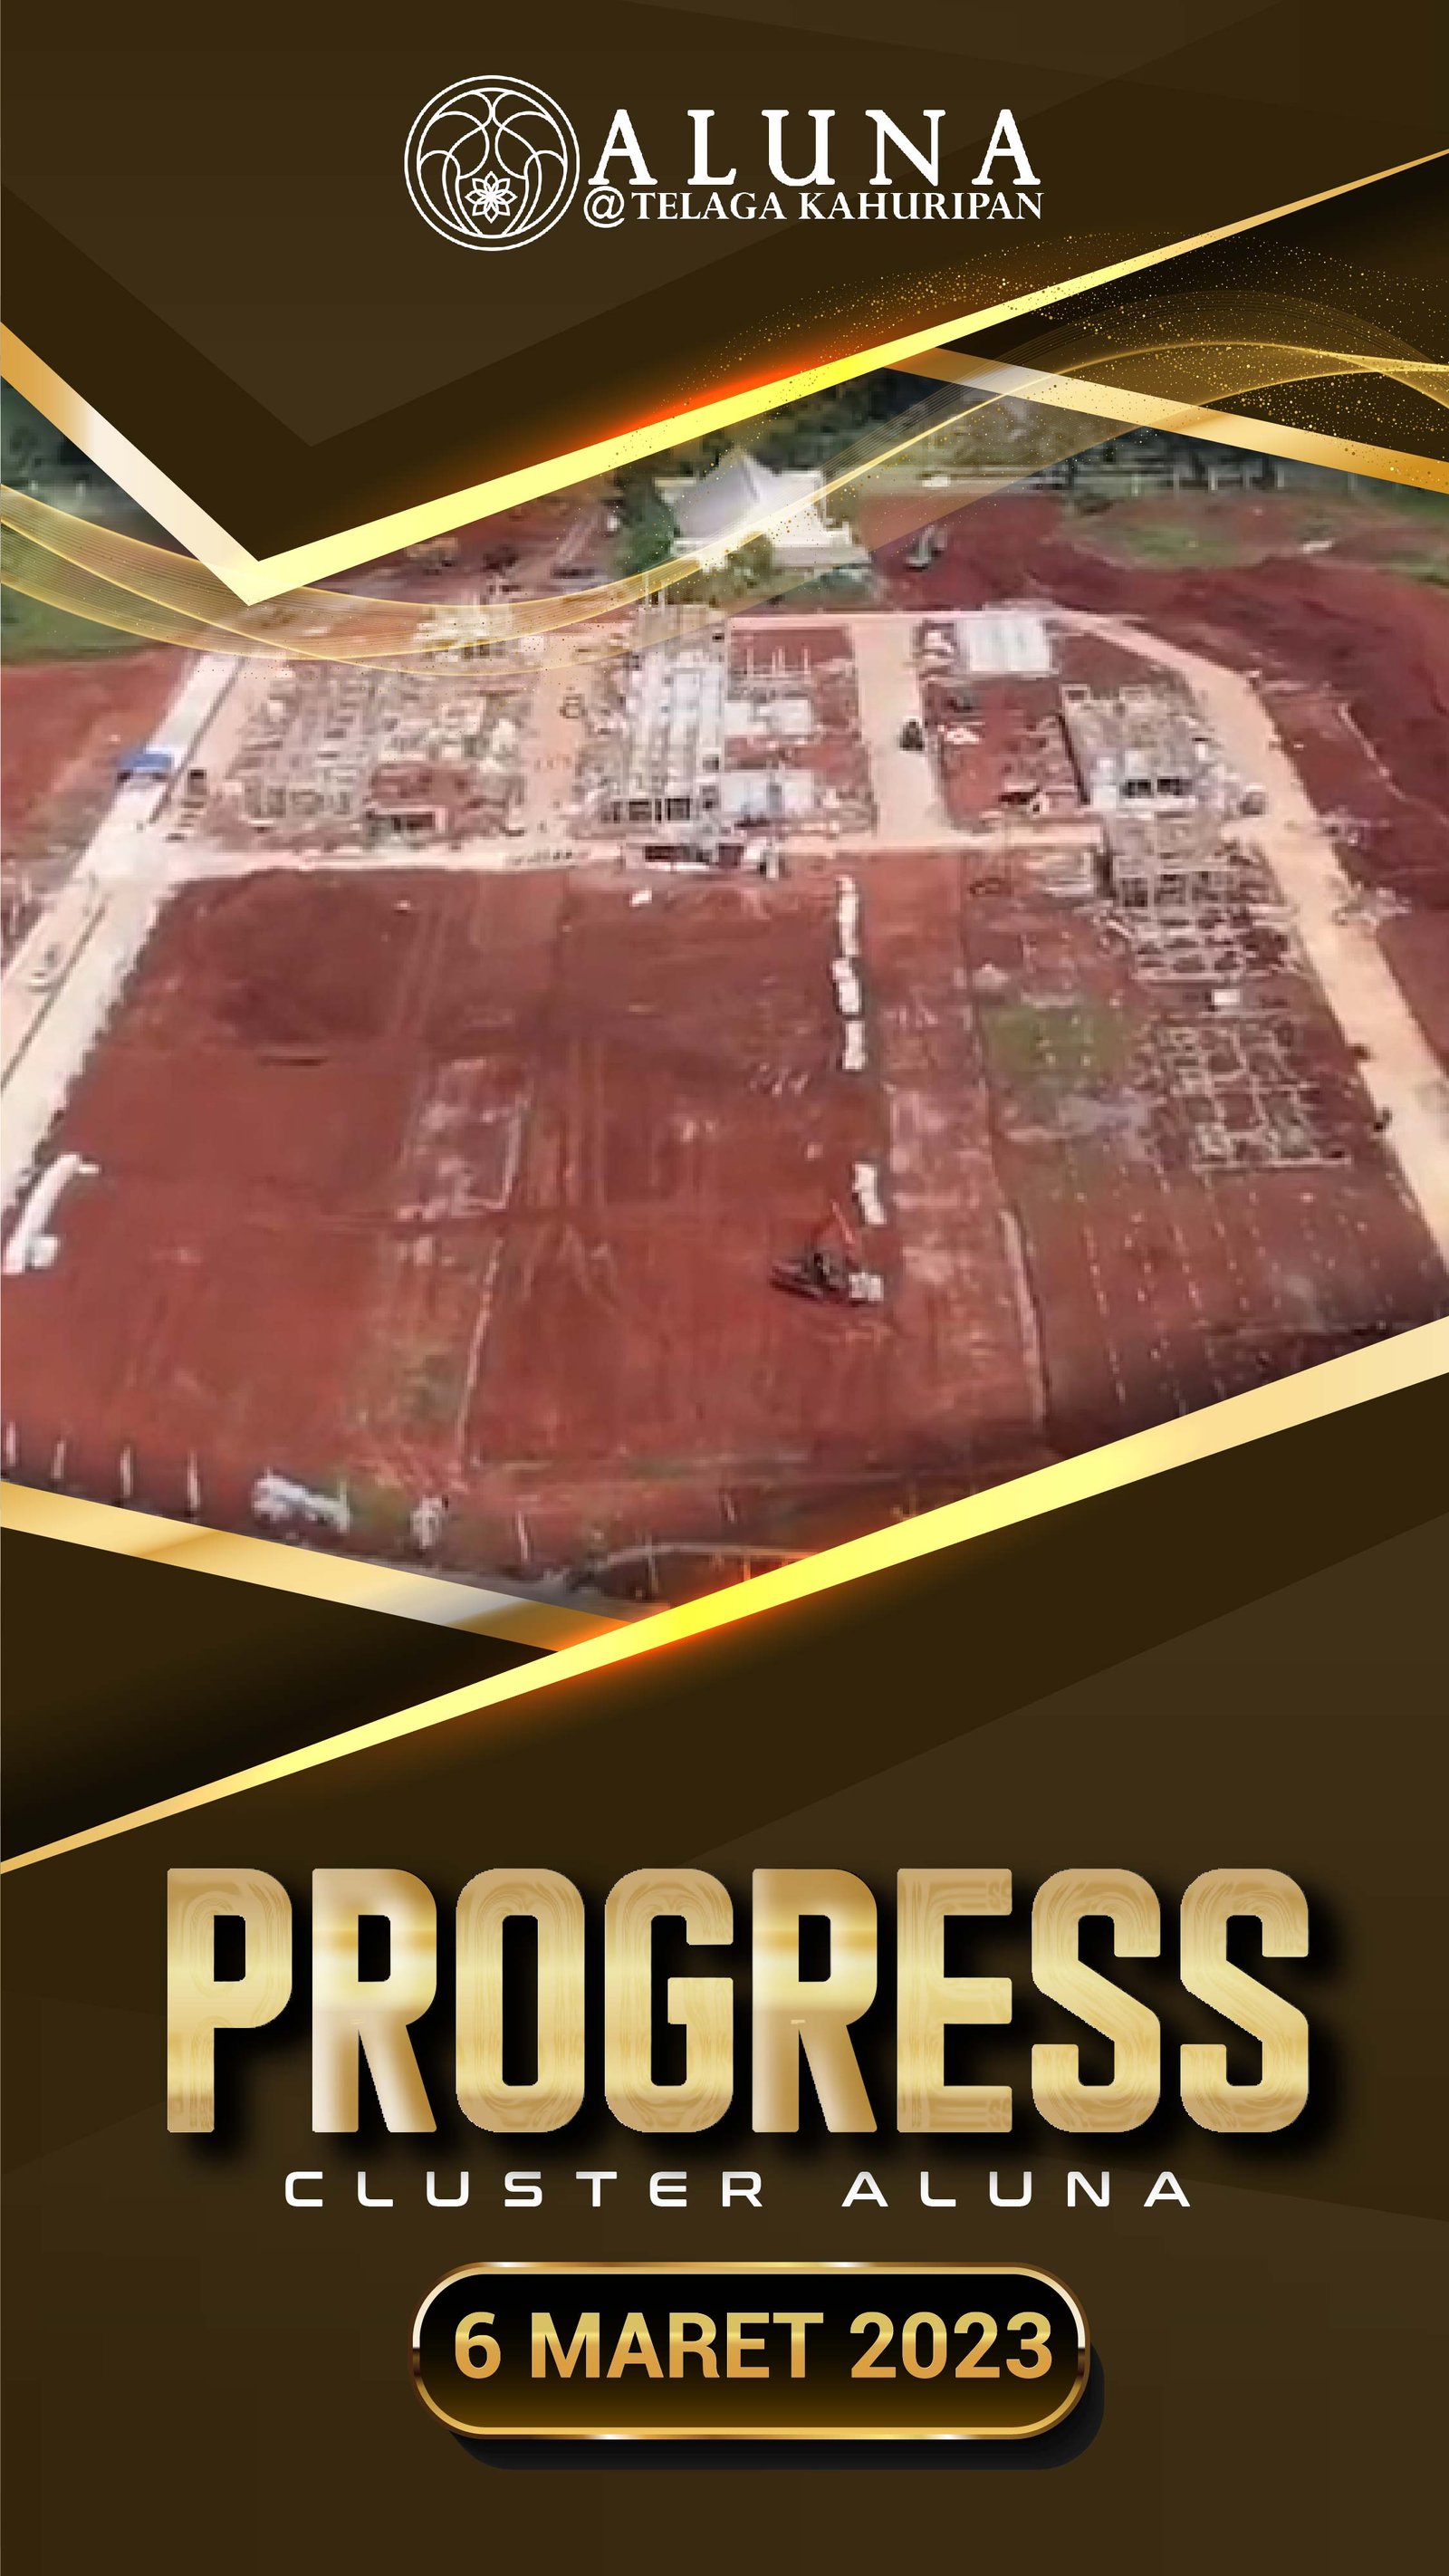 BLOG-progress-project-cluster-aluna-by-telaga-kahuripan-6-maret-2023